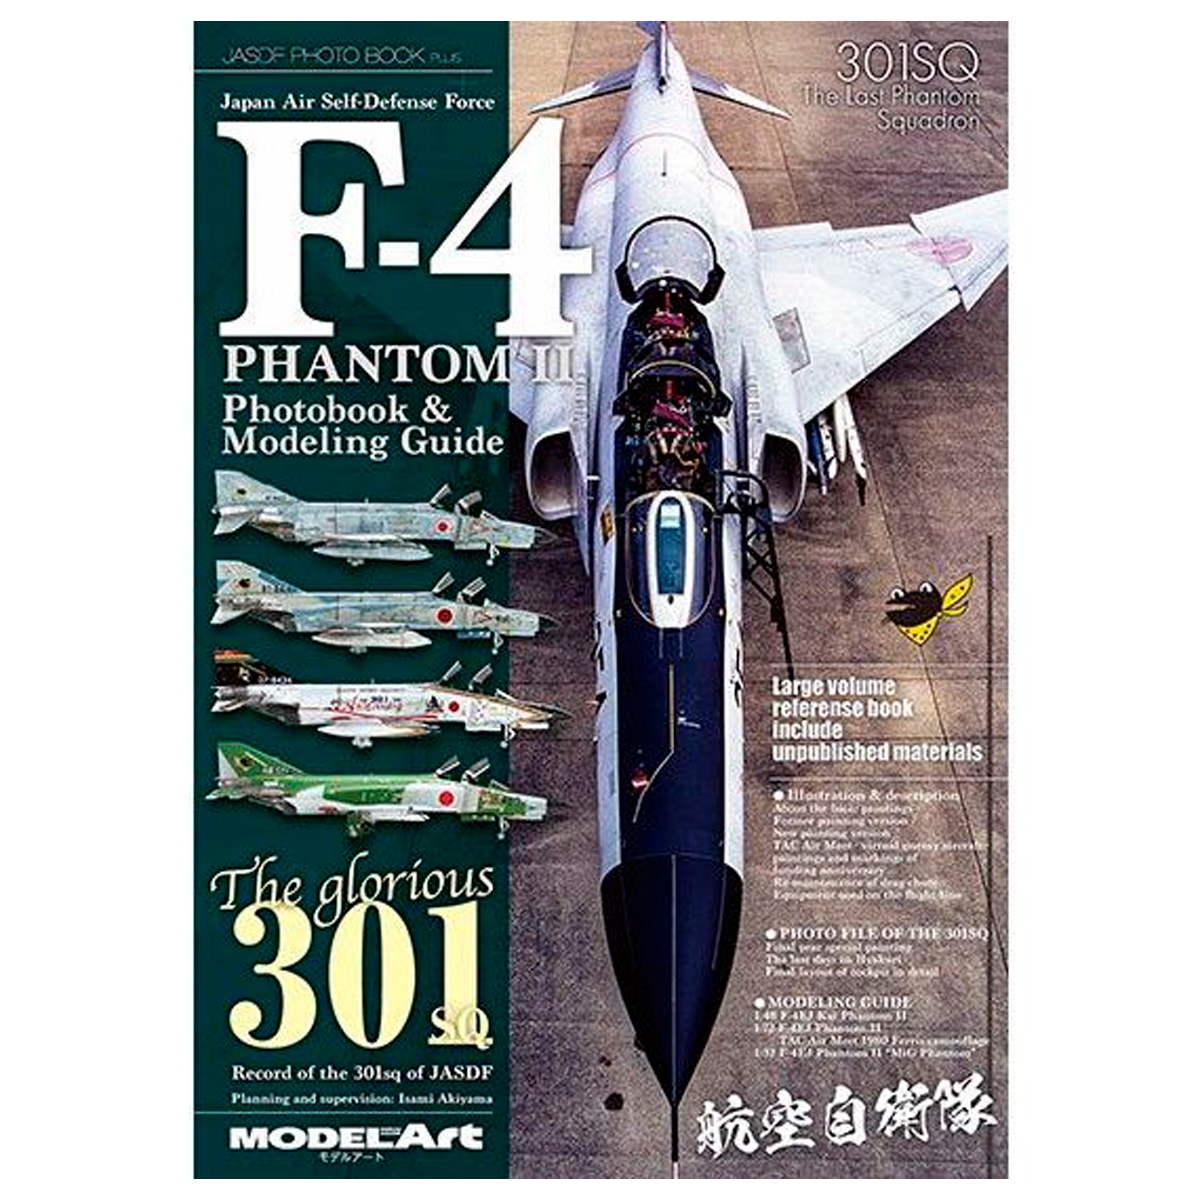 JASDF F-4 PHANTOM II PHOTO BOOK & Modeling guide “The glorious 301 Squadron”